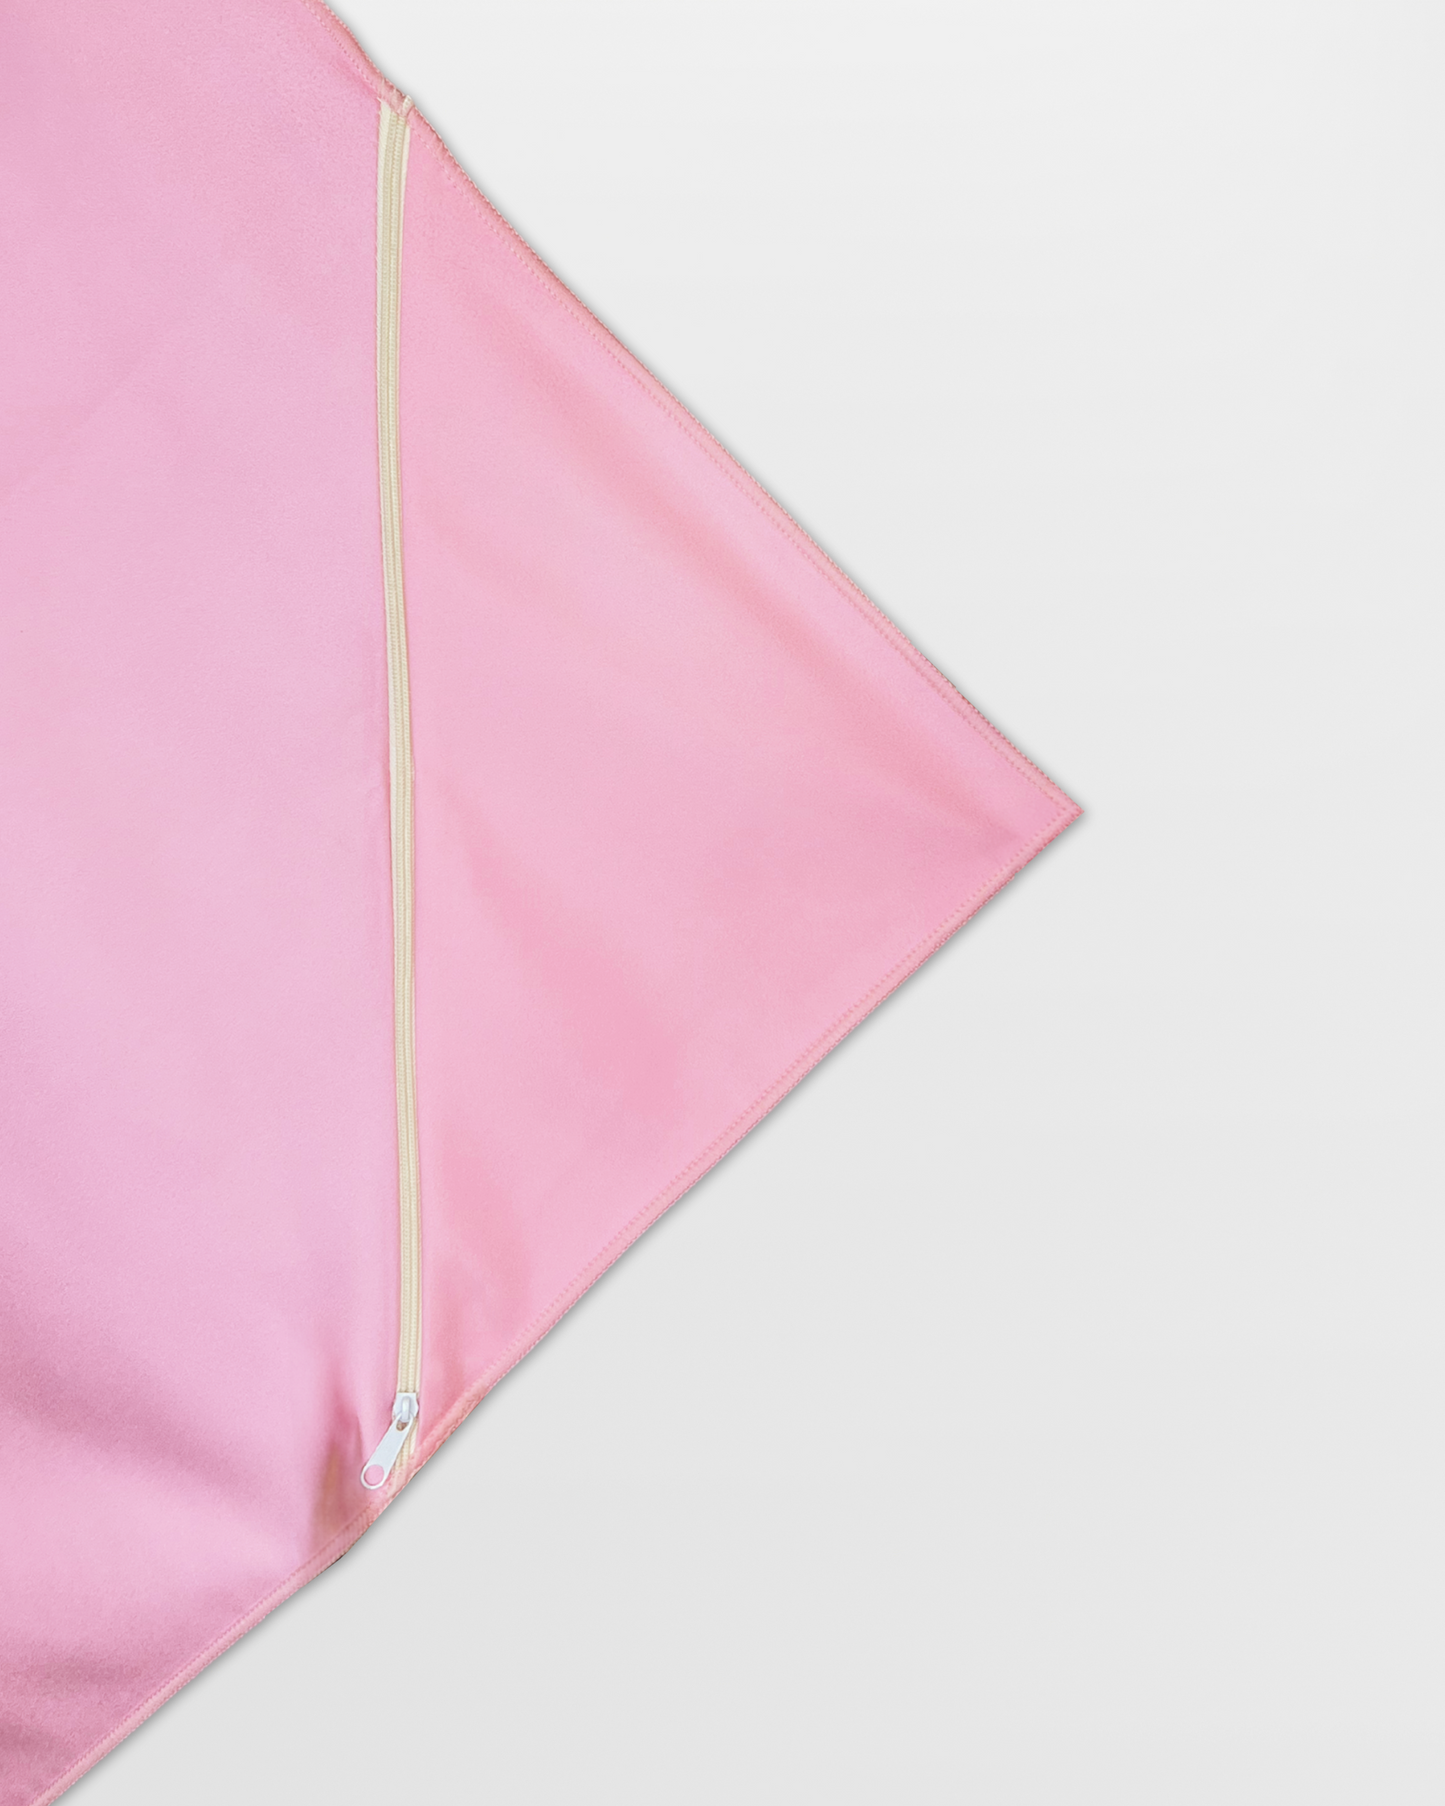 Iconic Pink gym towel